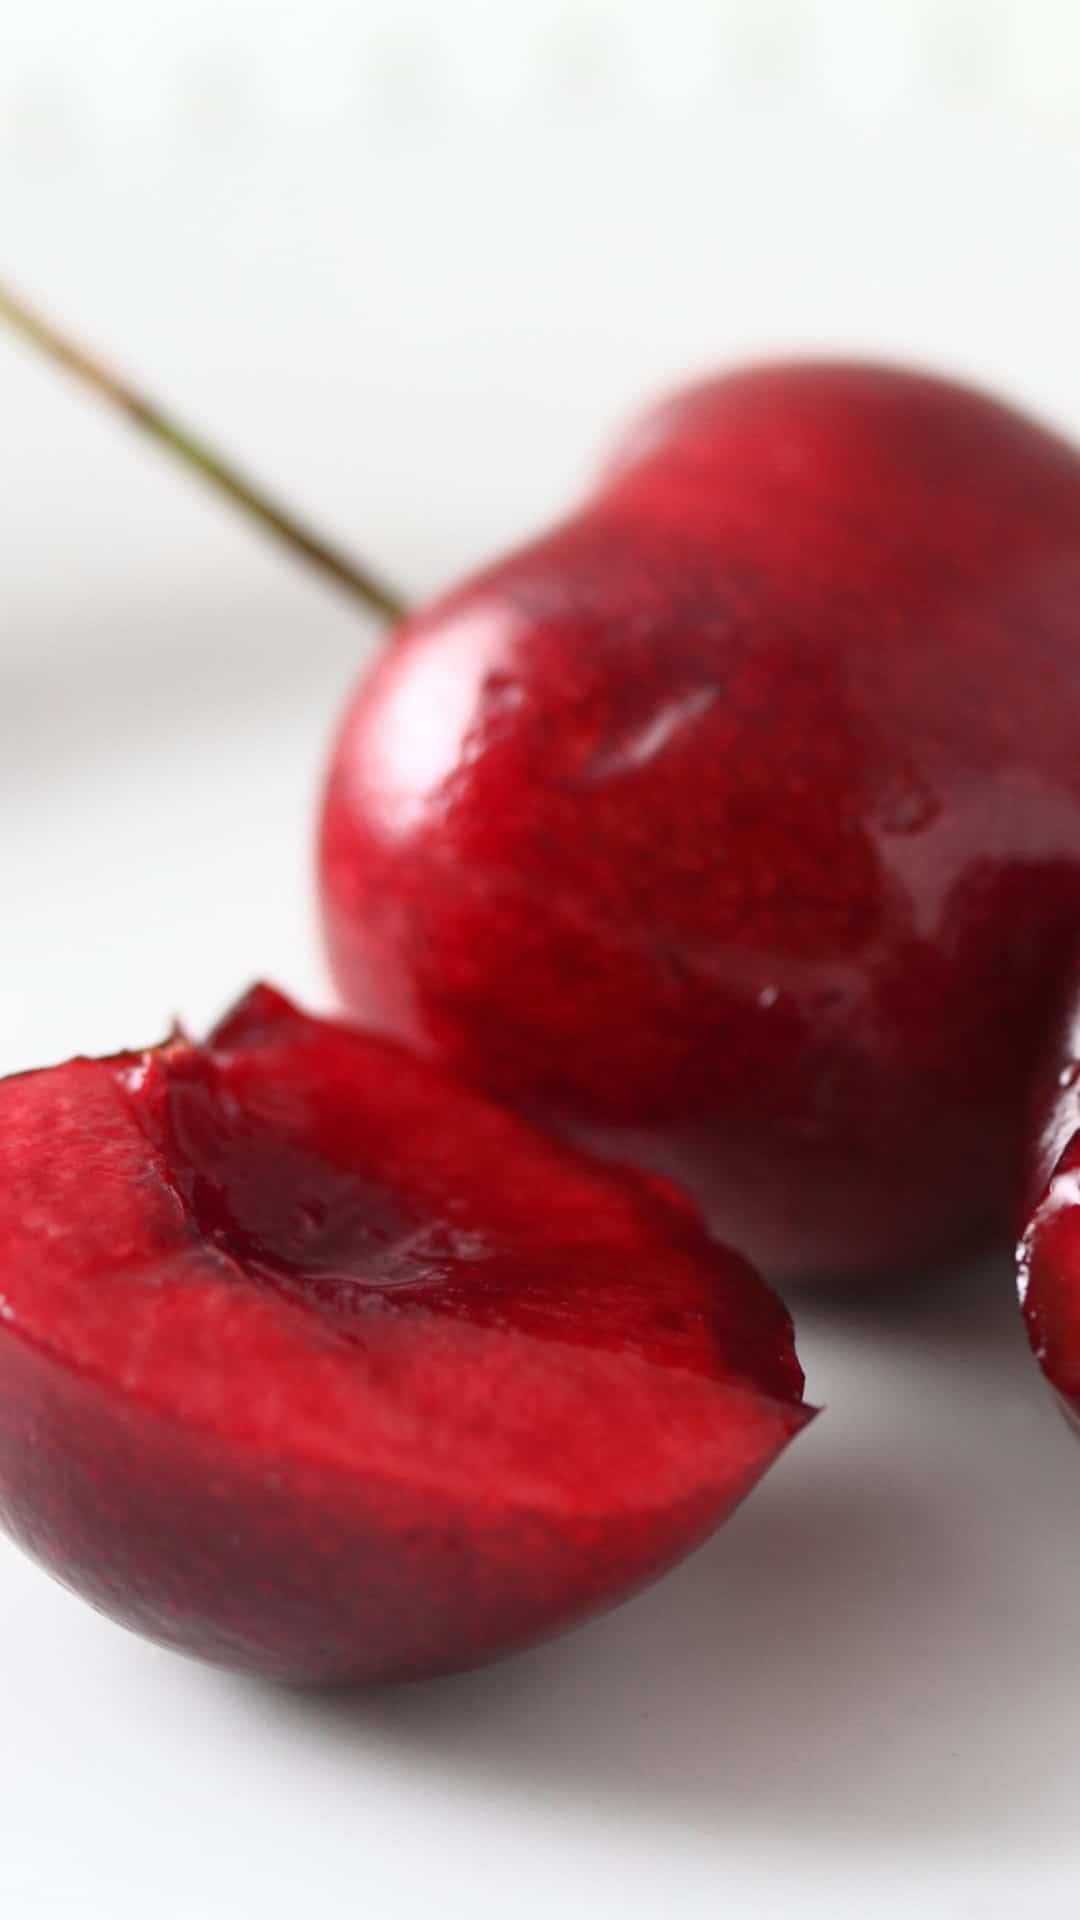 Red Cherries Macro Fruit Half Lockscreen Android Wallpaper